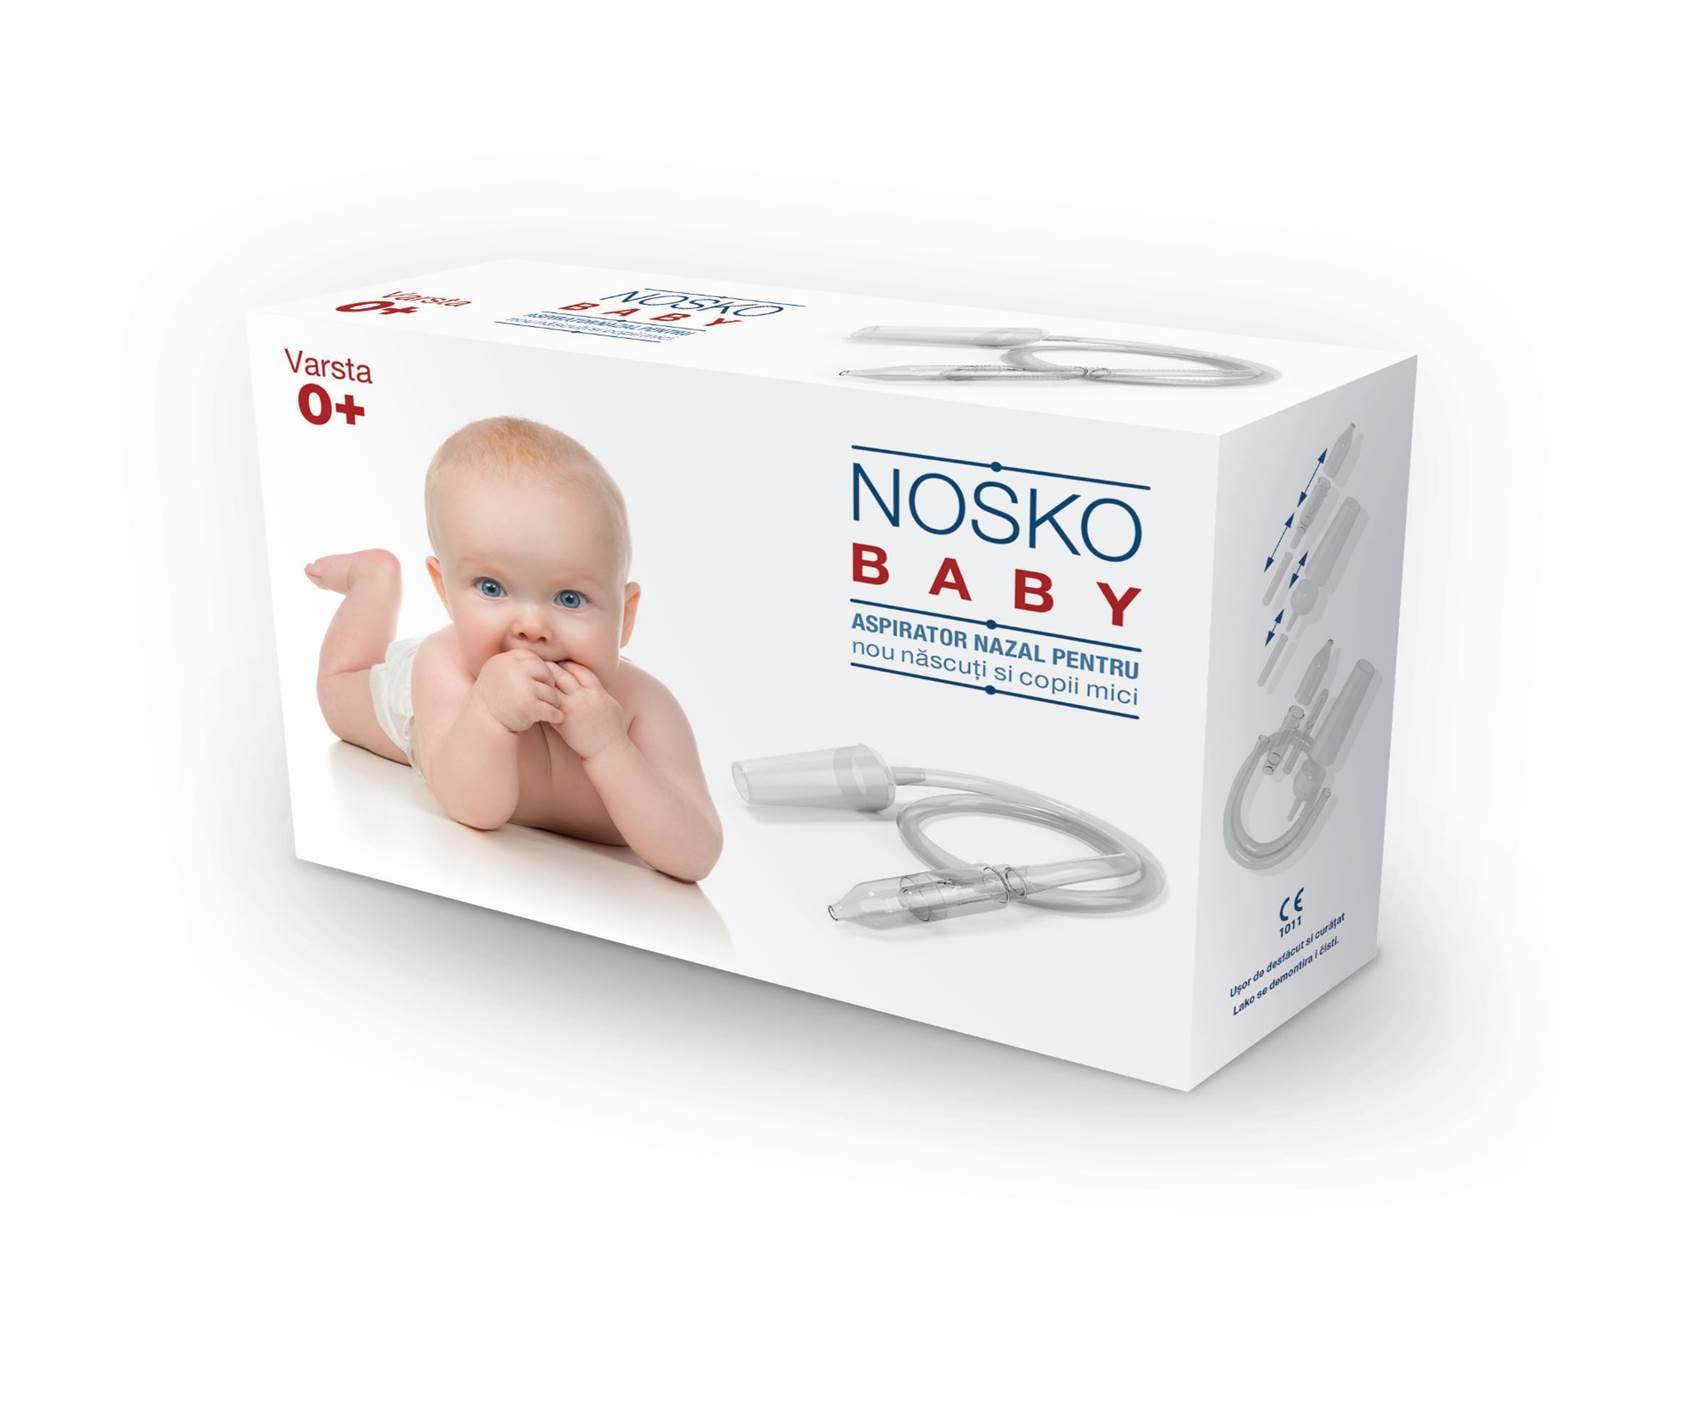 Nosko Baby aspirator nazal aspirator imagine teramed.ro